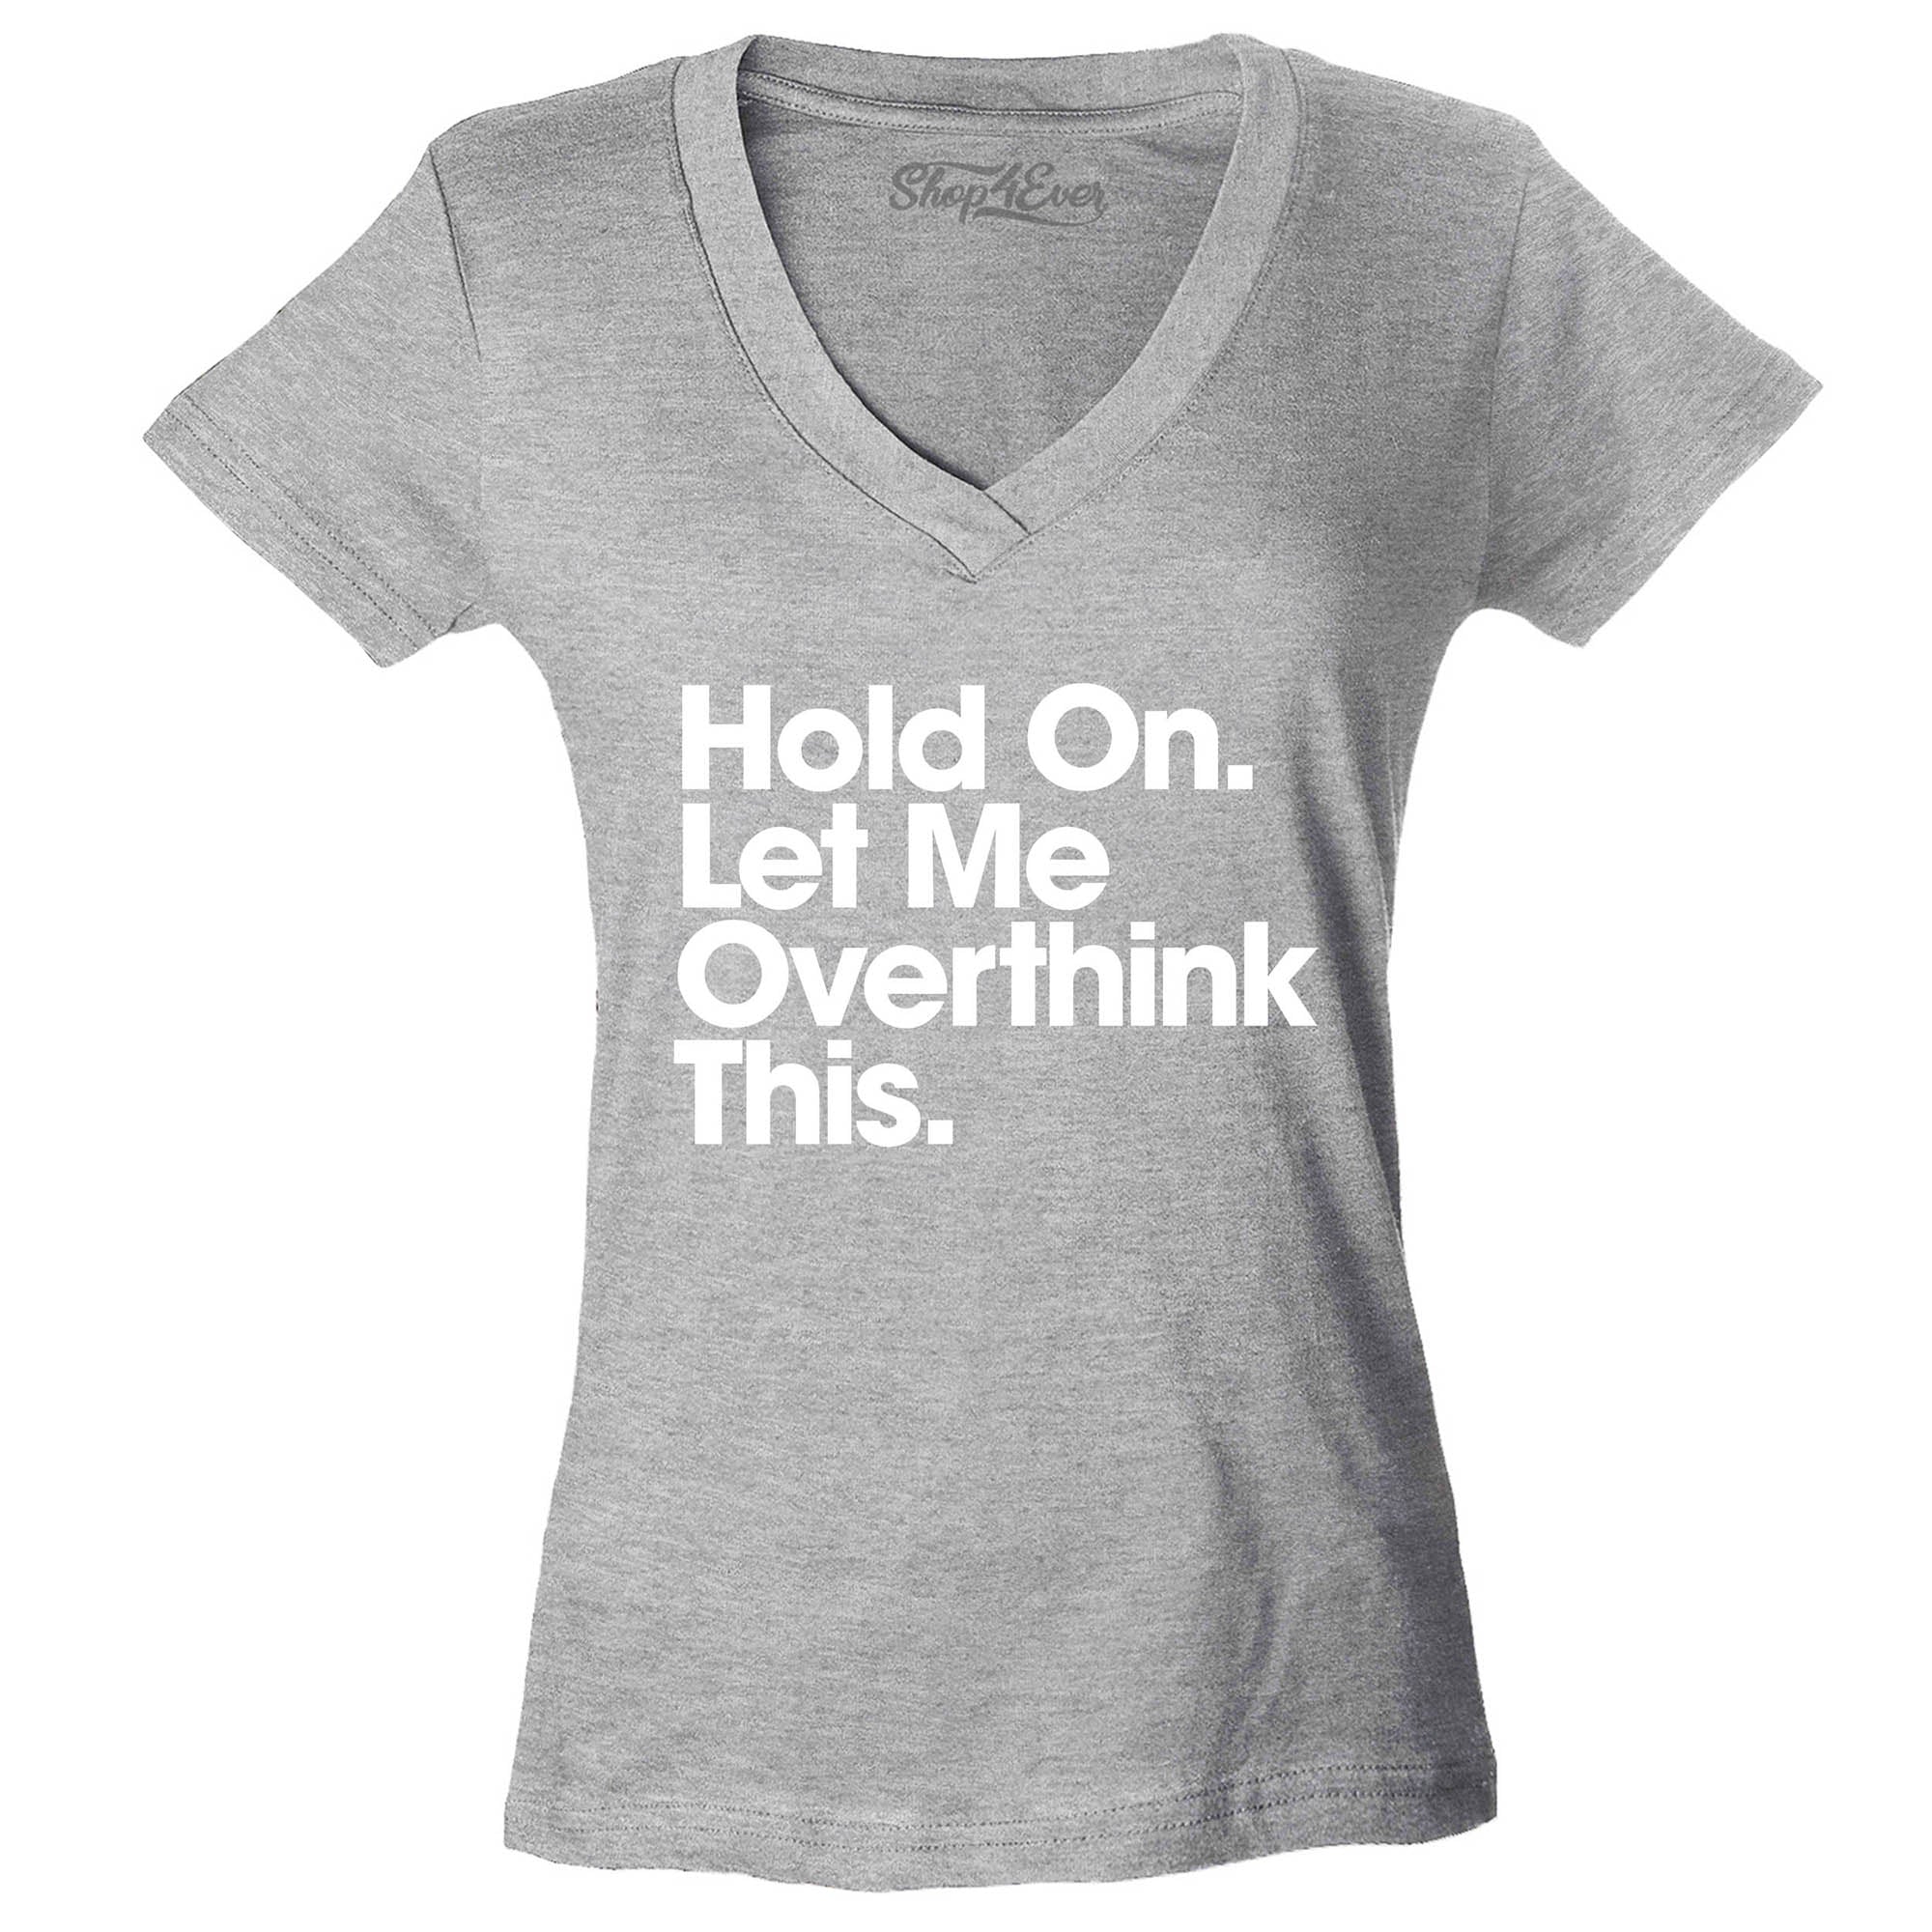 Hold On. Let Me Overthink This. Women's V-Neck T-Shirt Slim Fit